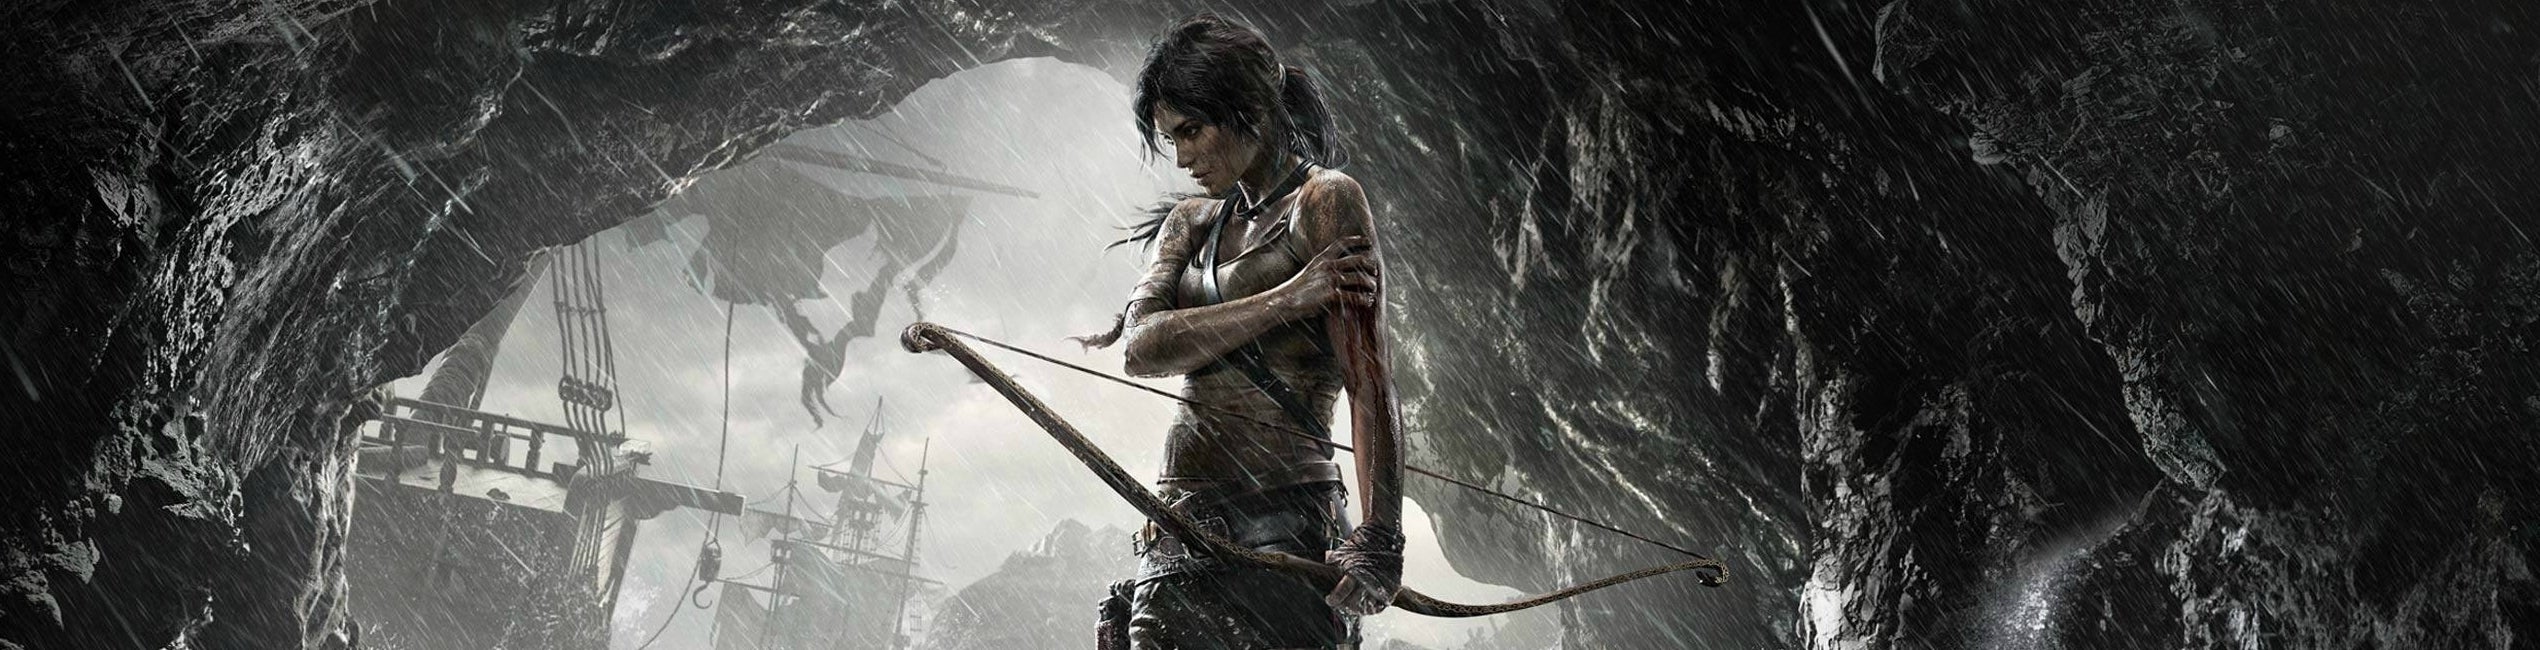 Image for Druhá strana mince Tomb Raidera aneb jak nás tahali za fusekli?